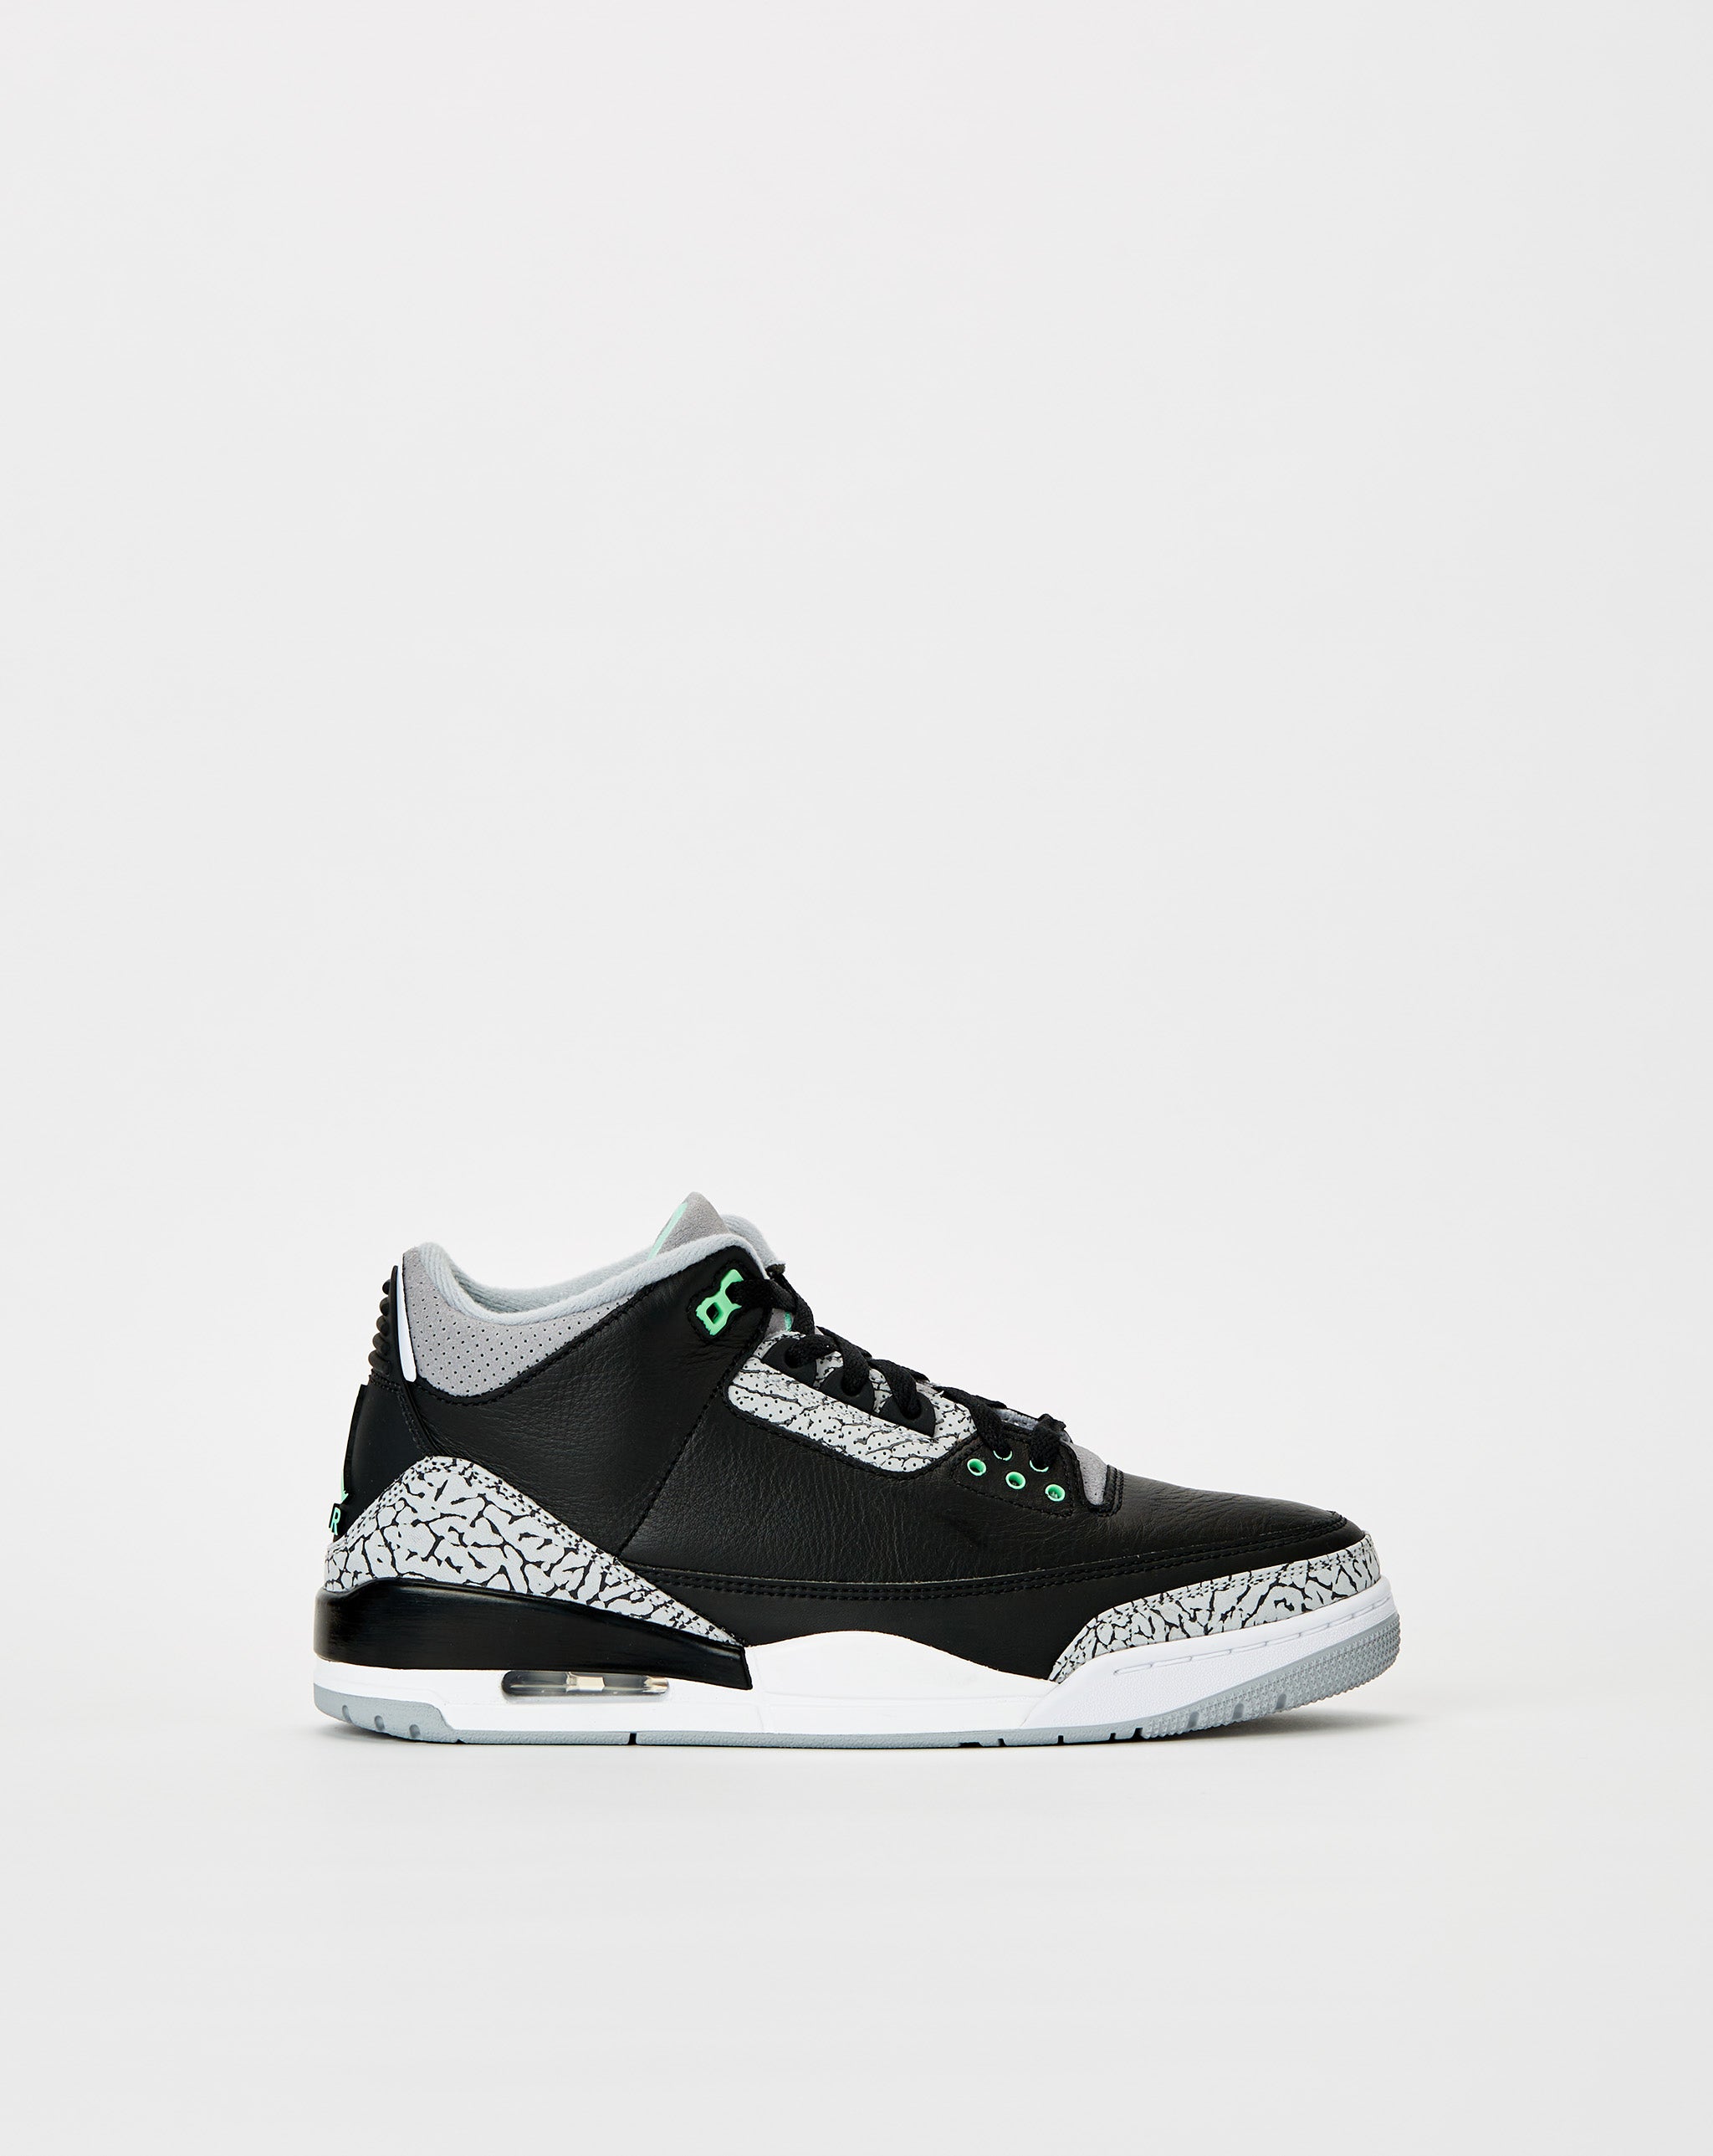 Air Jordan Lightning 4s Jordan Sneaker Tees Black Sneaker Bae quantity  - Cheap Erlebniswelt-fliegenfischen Jordan outlet